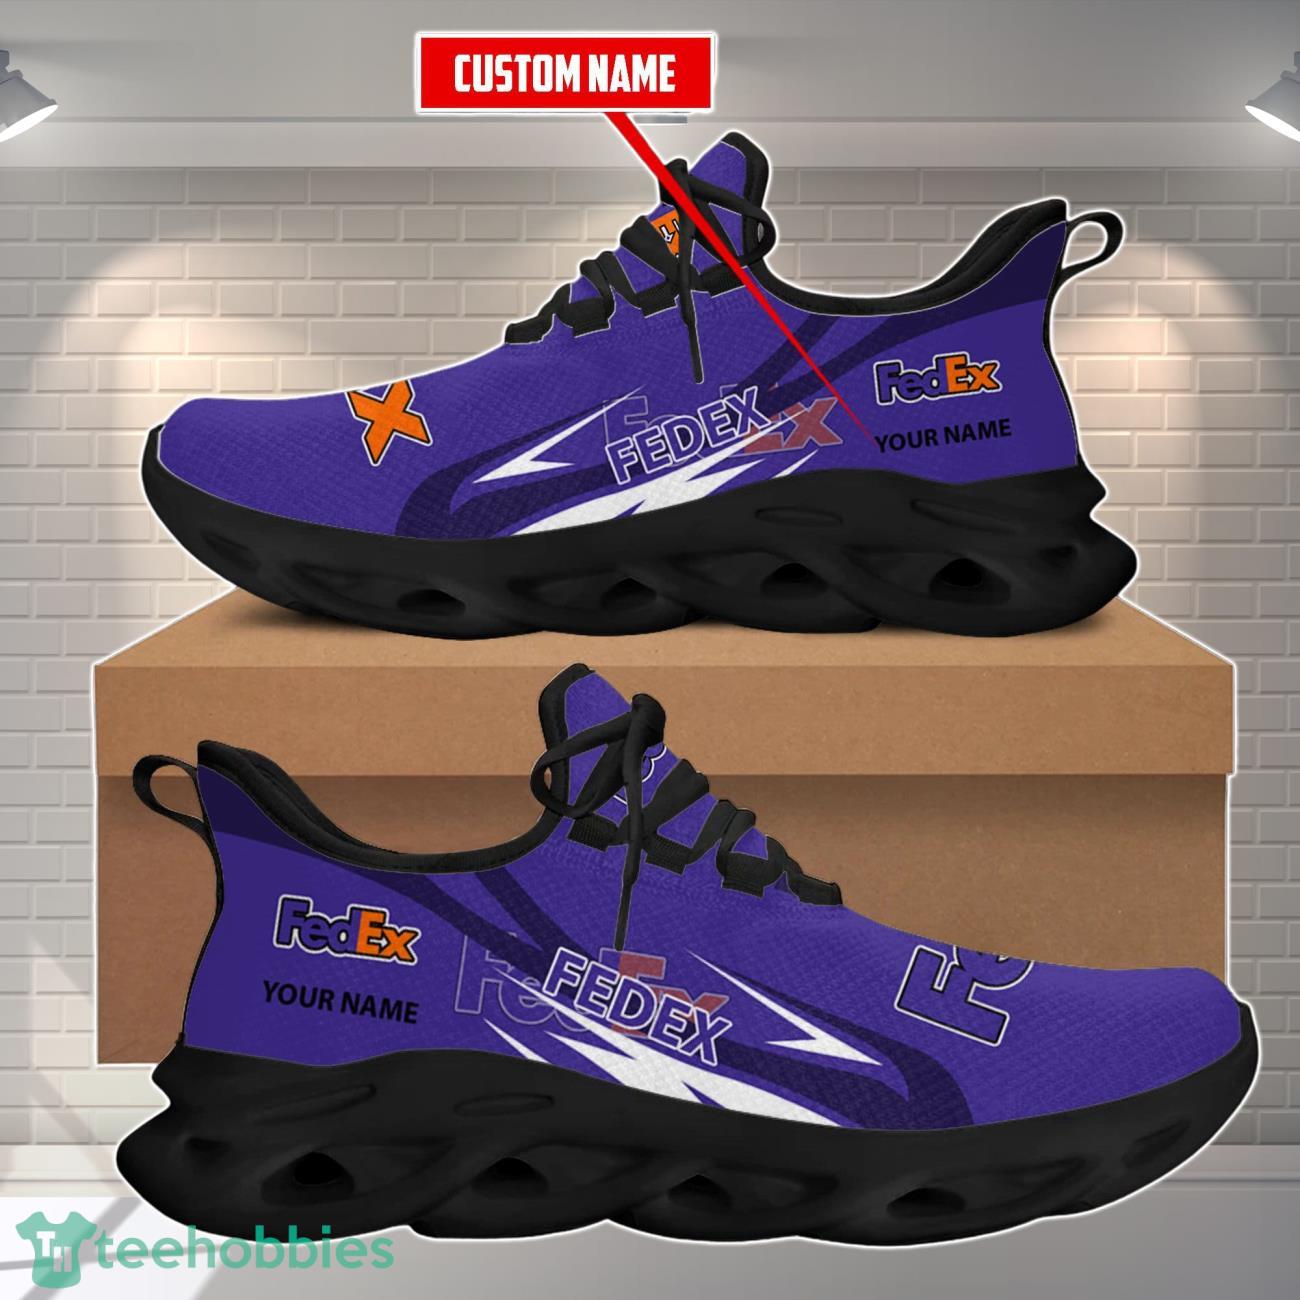 Fedex Max Soul Shoes Premium Edition Custom Name For Men Women Product Photo 1